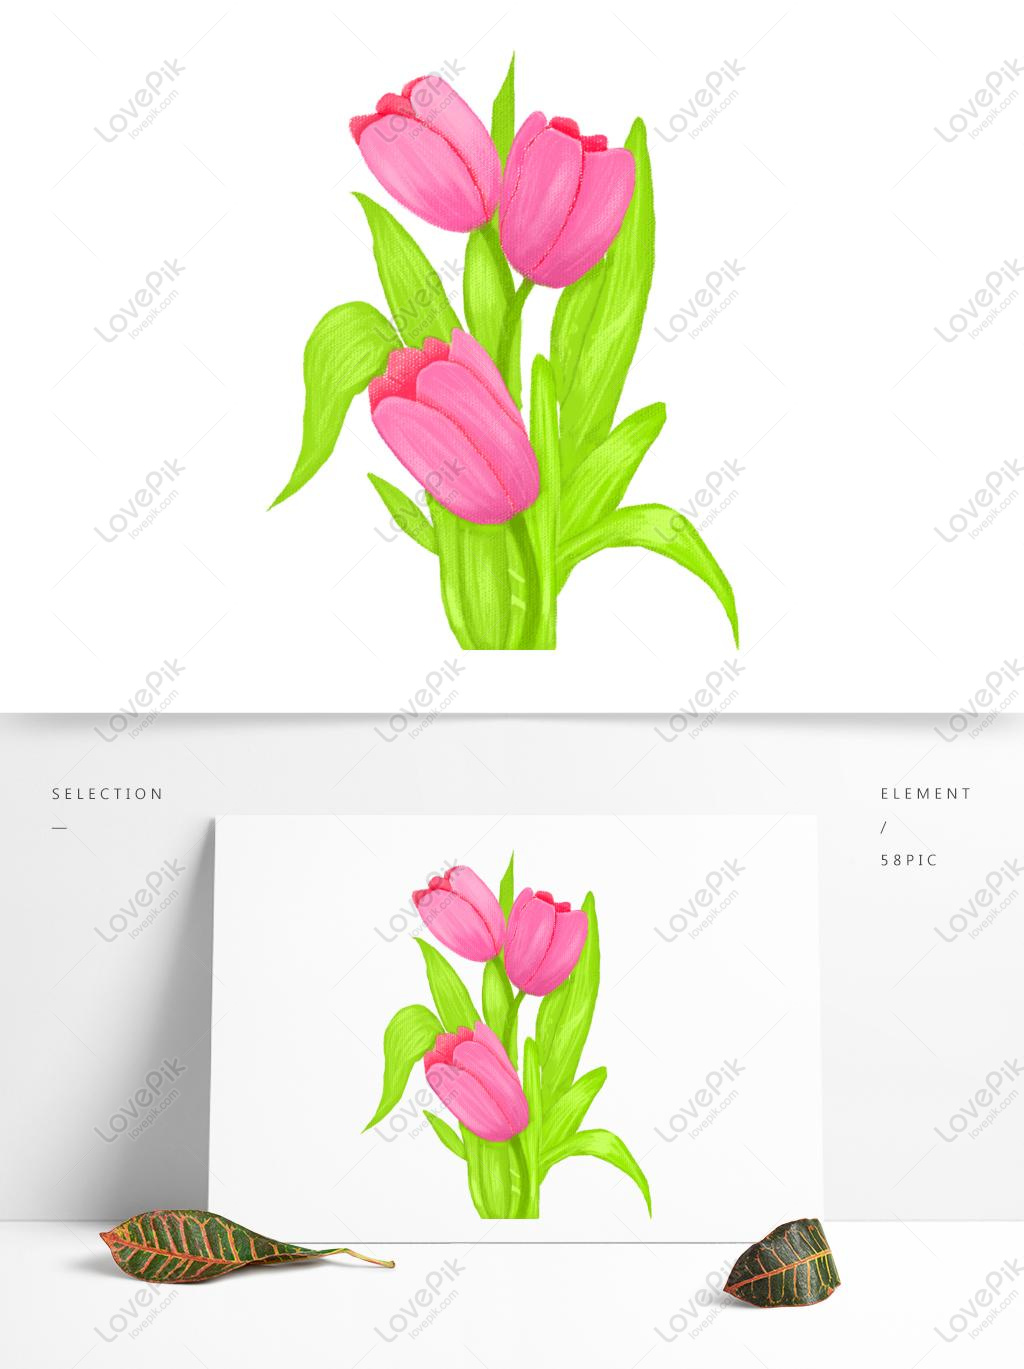 Tanaman Bunga Tulip Yang Dilukis Dengan Tangan Gambar Unduh Gratis Grafik 732719665 Format Gambar Psd Lovepik Com